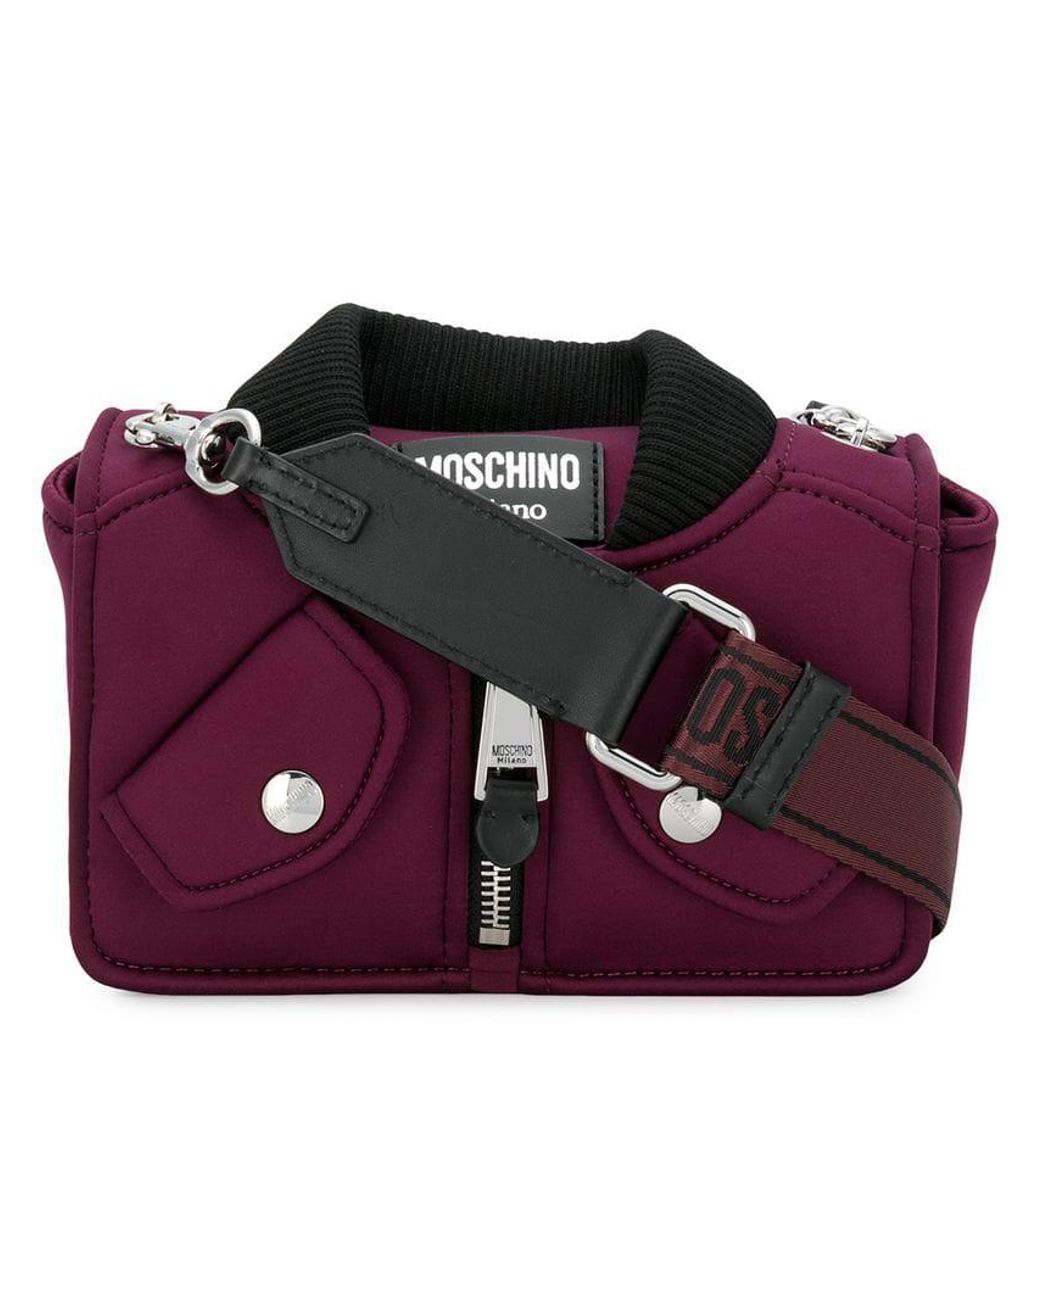 Moschino Bomber Jacket Shoulder Bag in Pink | Lyst